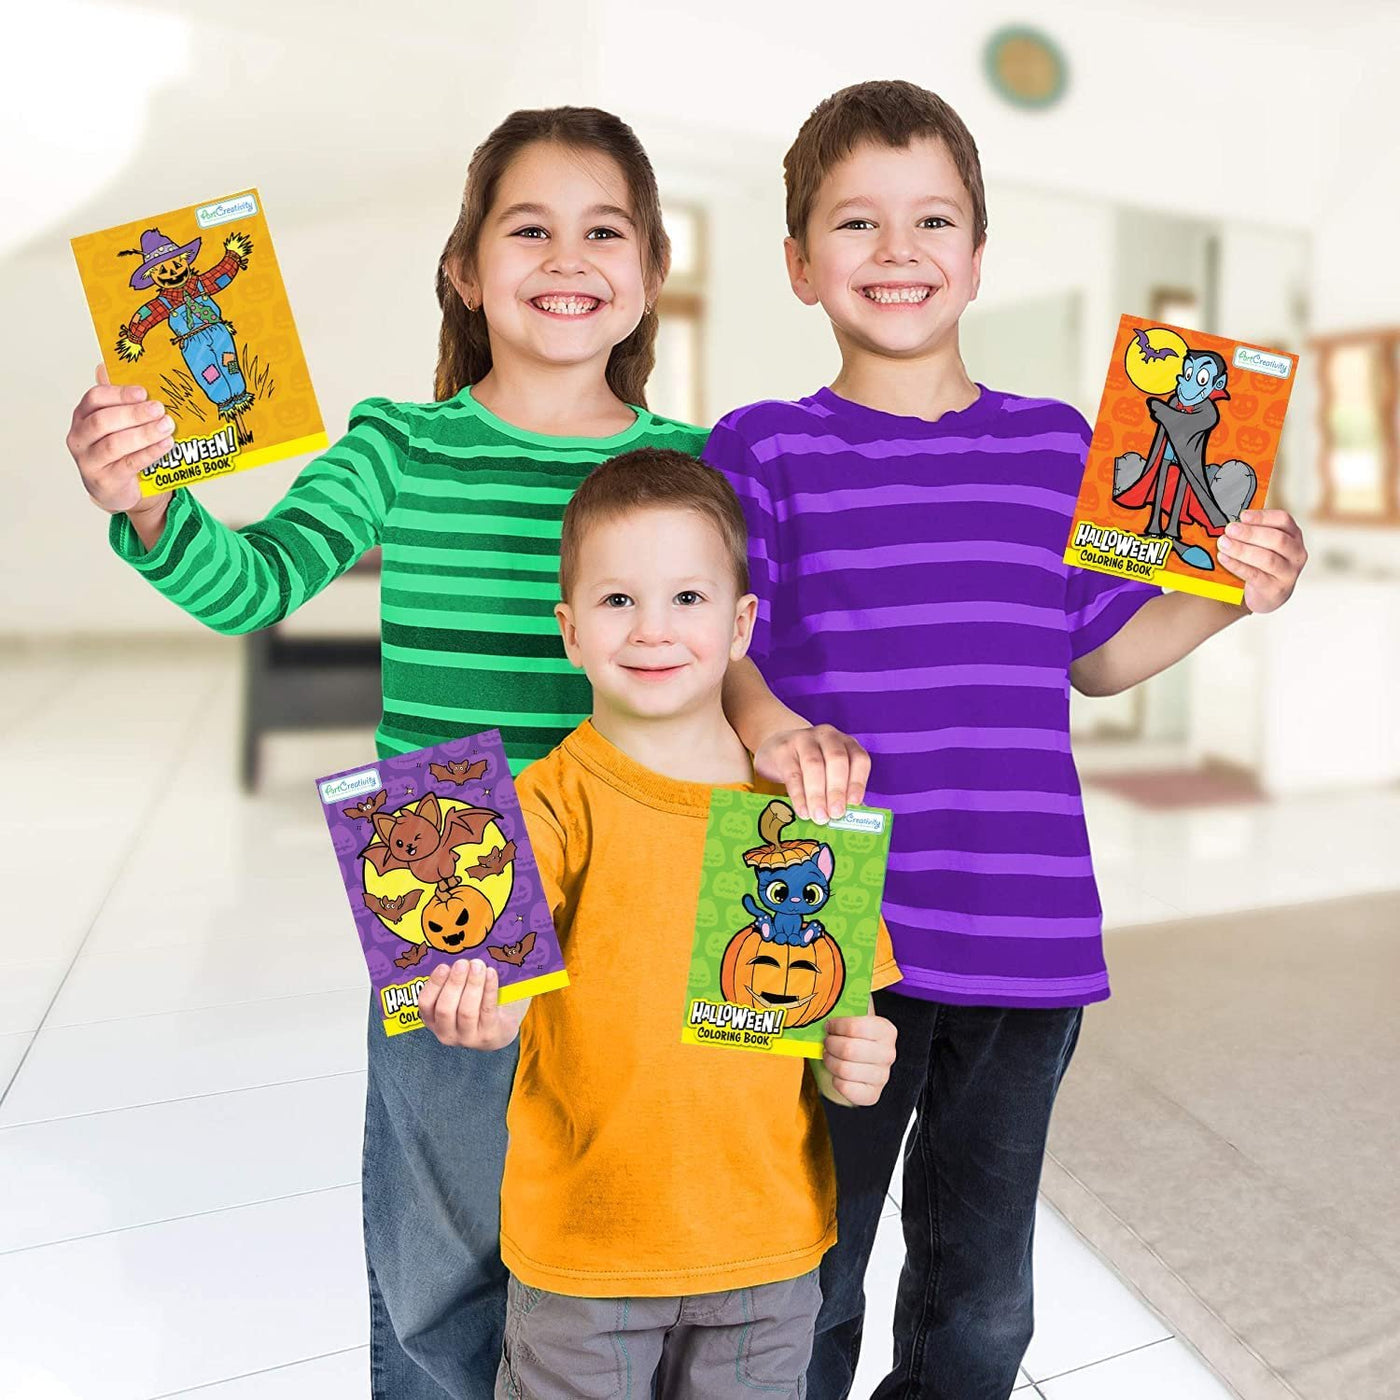 artcreativity ArtCreativity Assorted Mini Coloring Books for Kids - Bulk  Pack of 20 - 5 x 7 Inch Small Color Booklets in 4 Designs, Fun